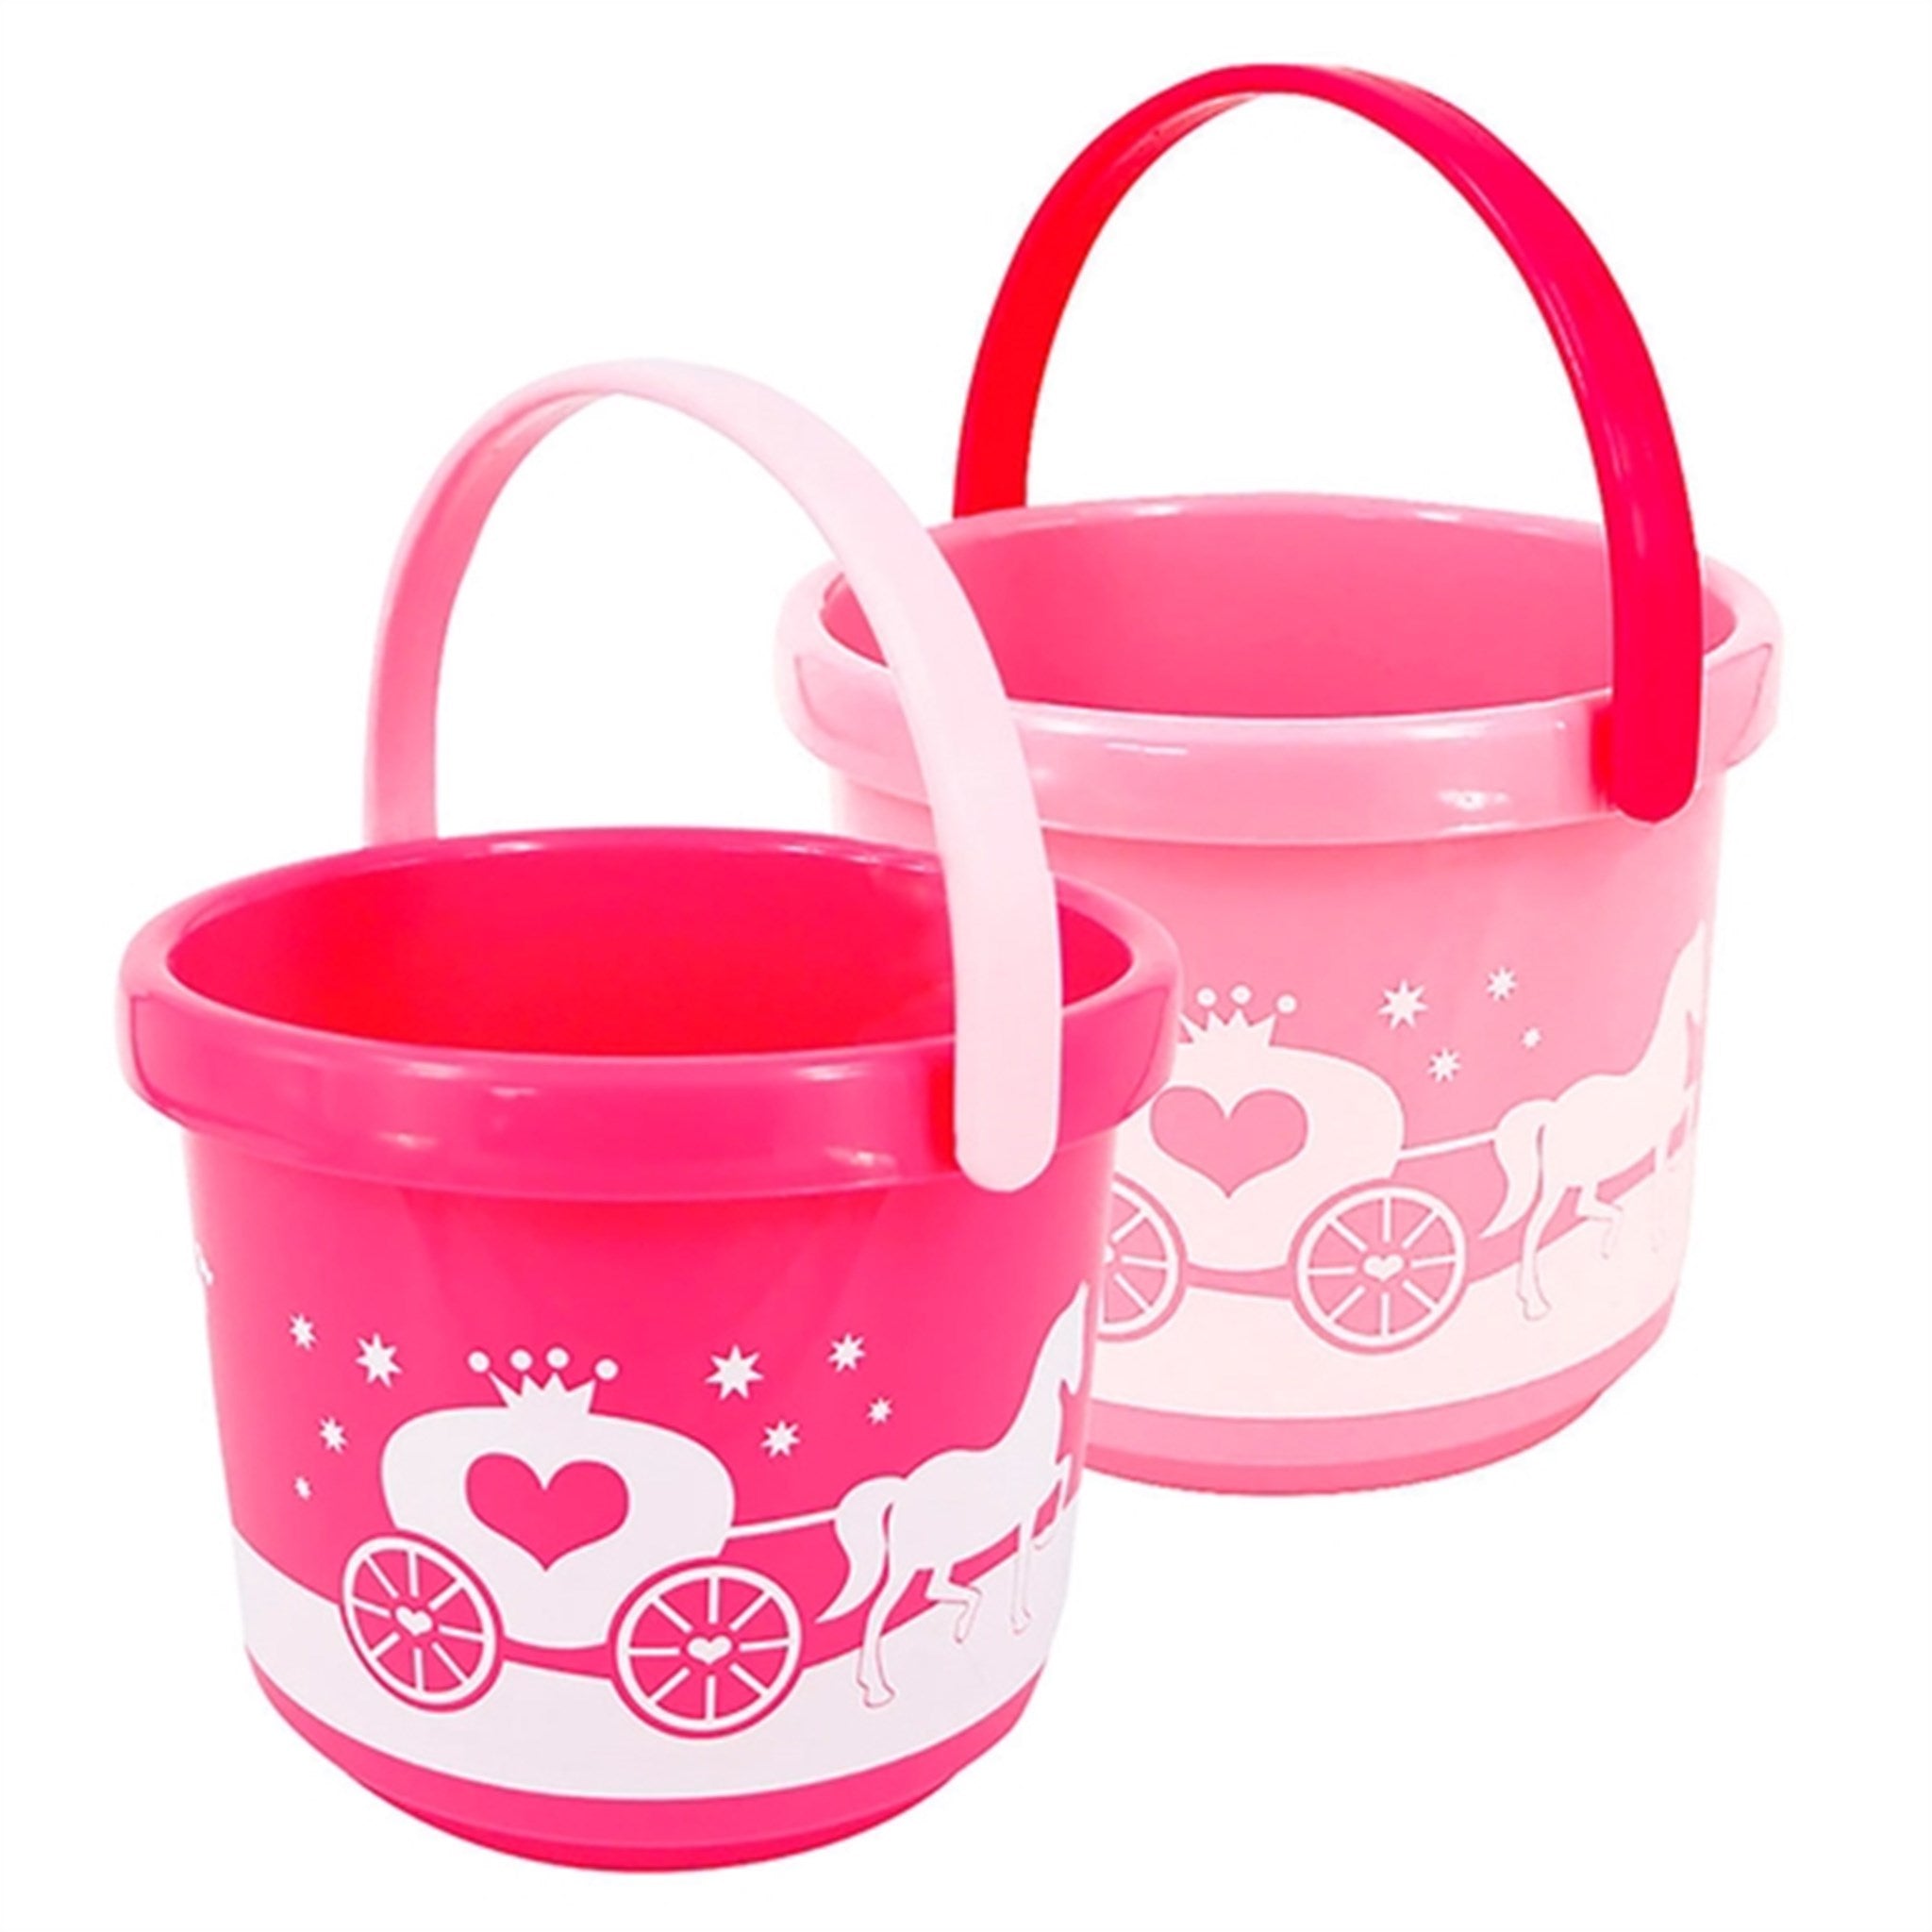 Spielstabil Small Bucket Princess - Rose 2